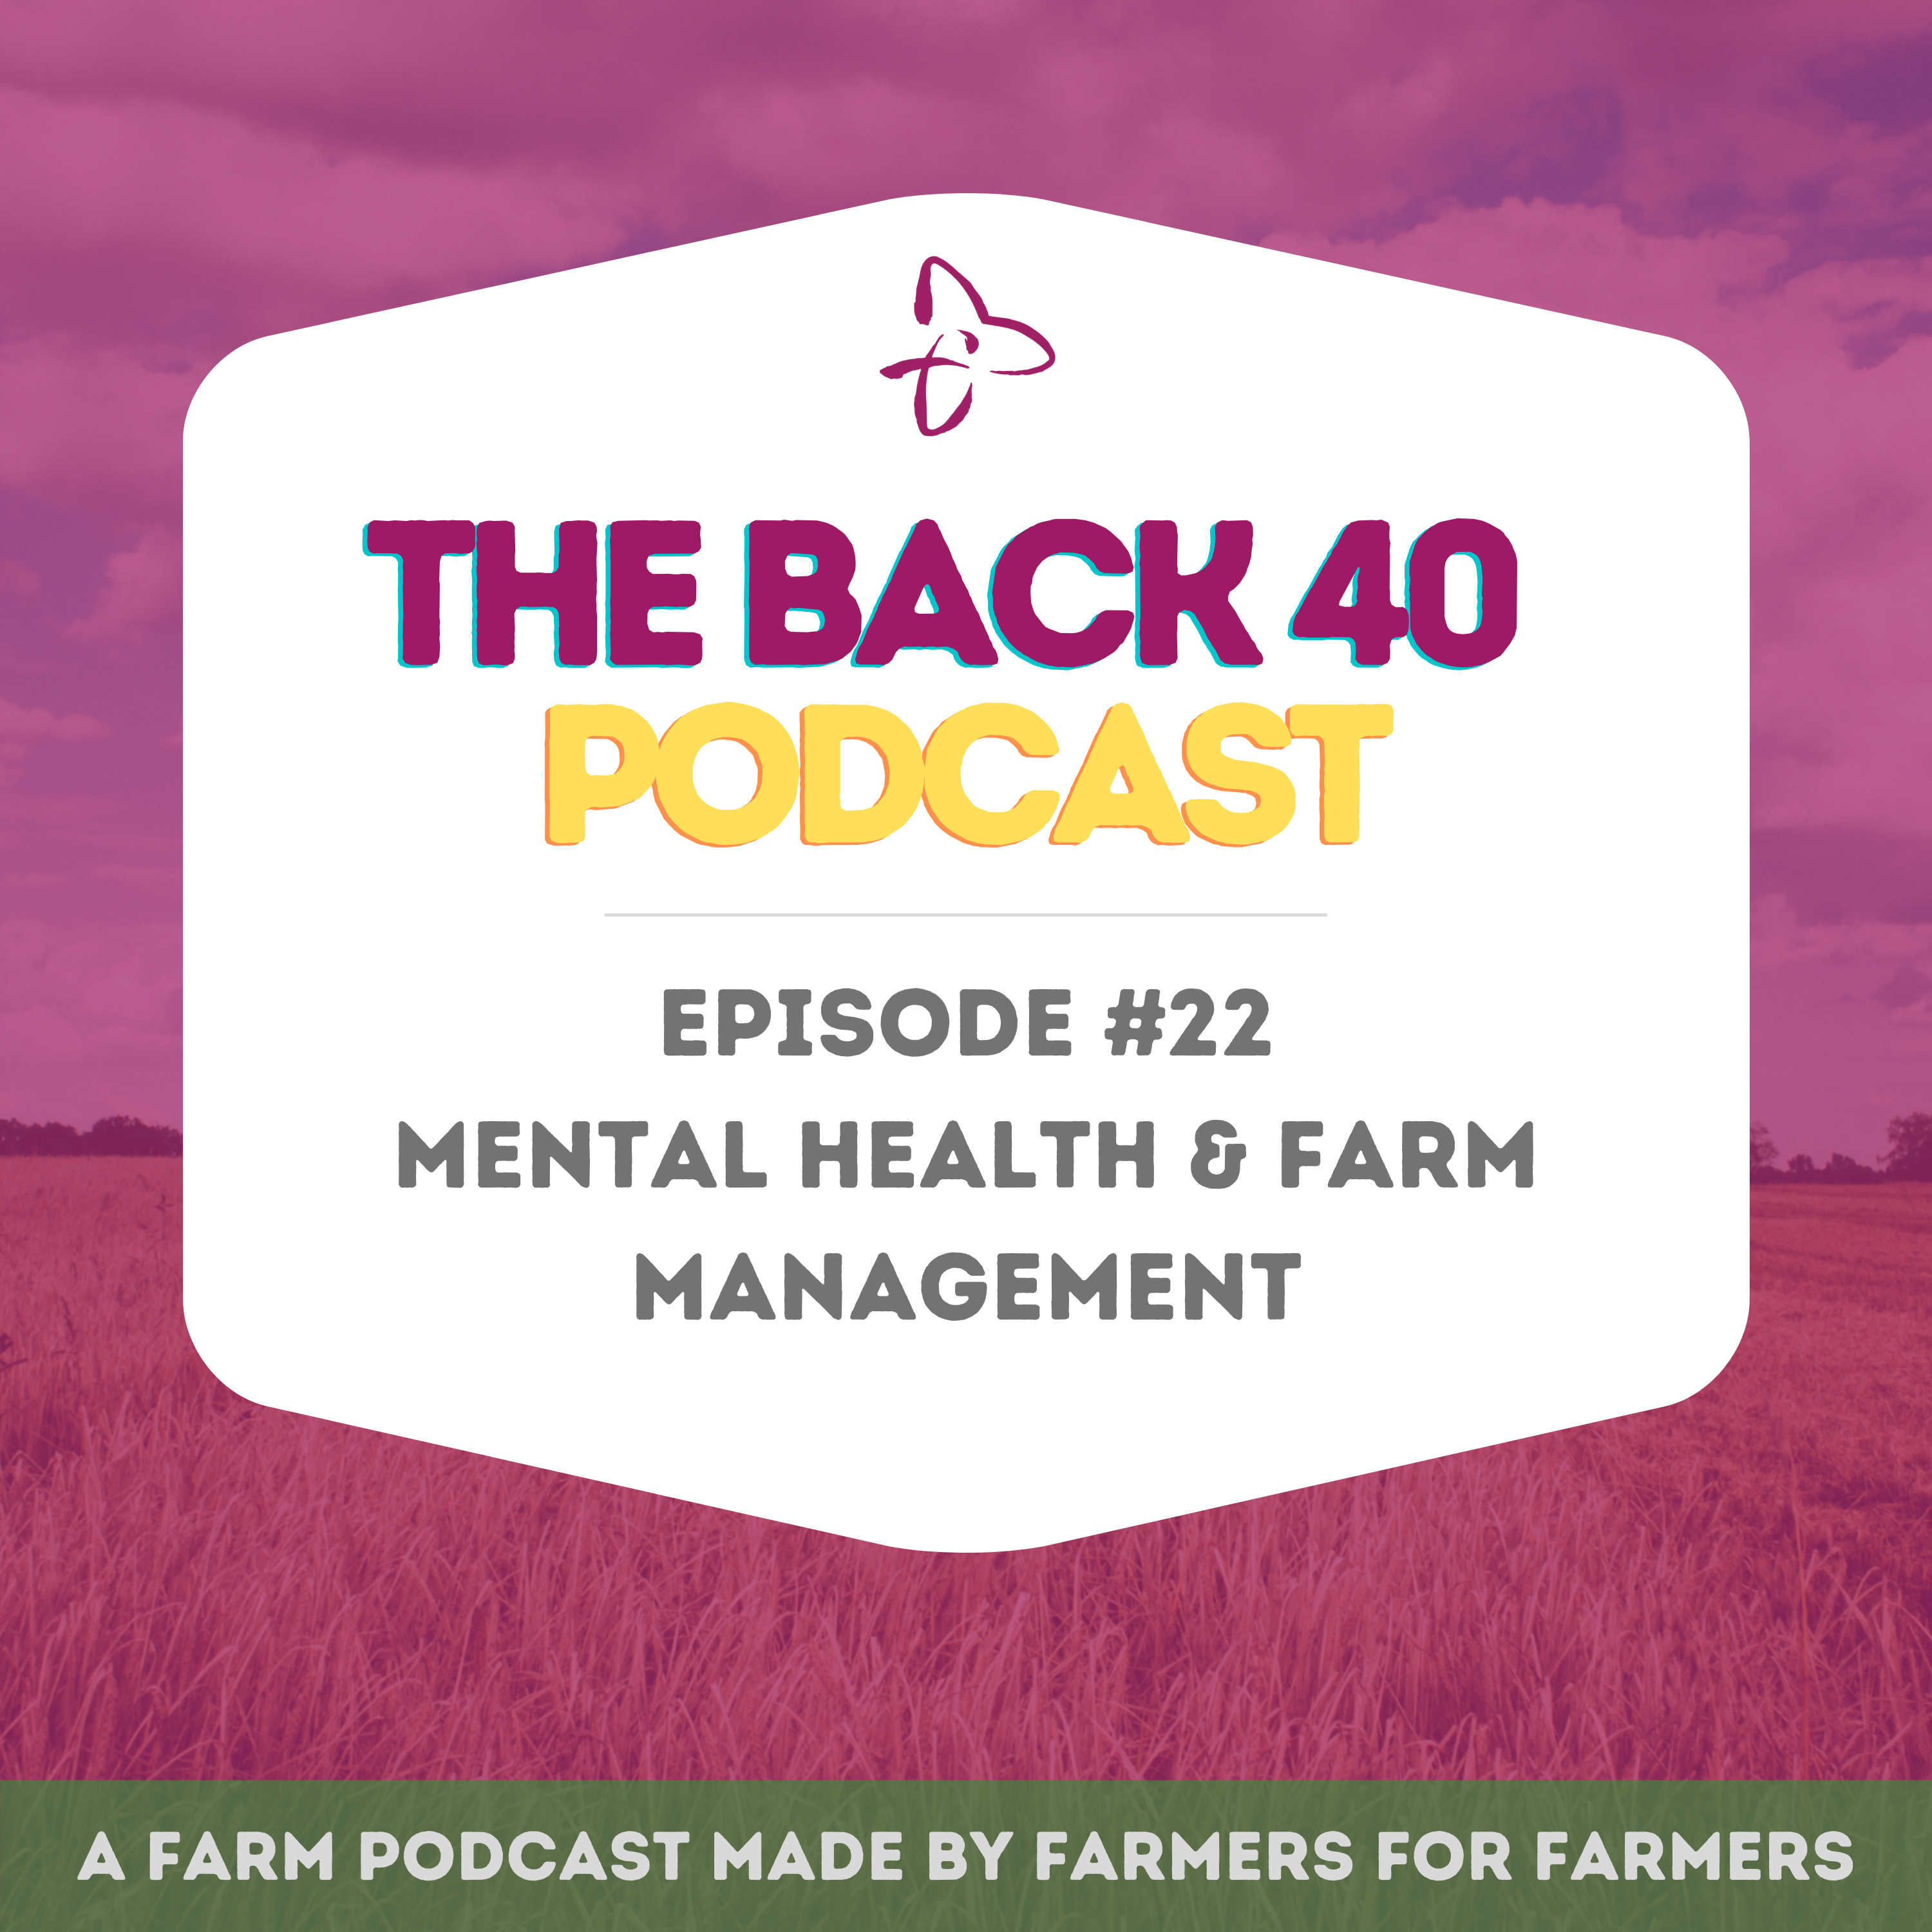 Mental Health & Farm Management